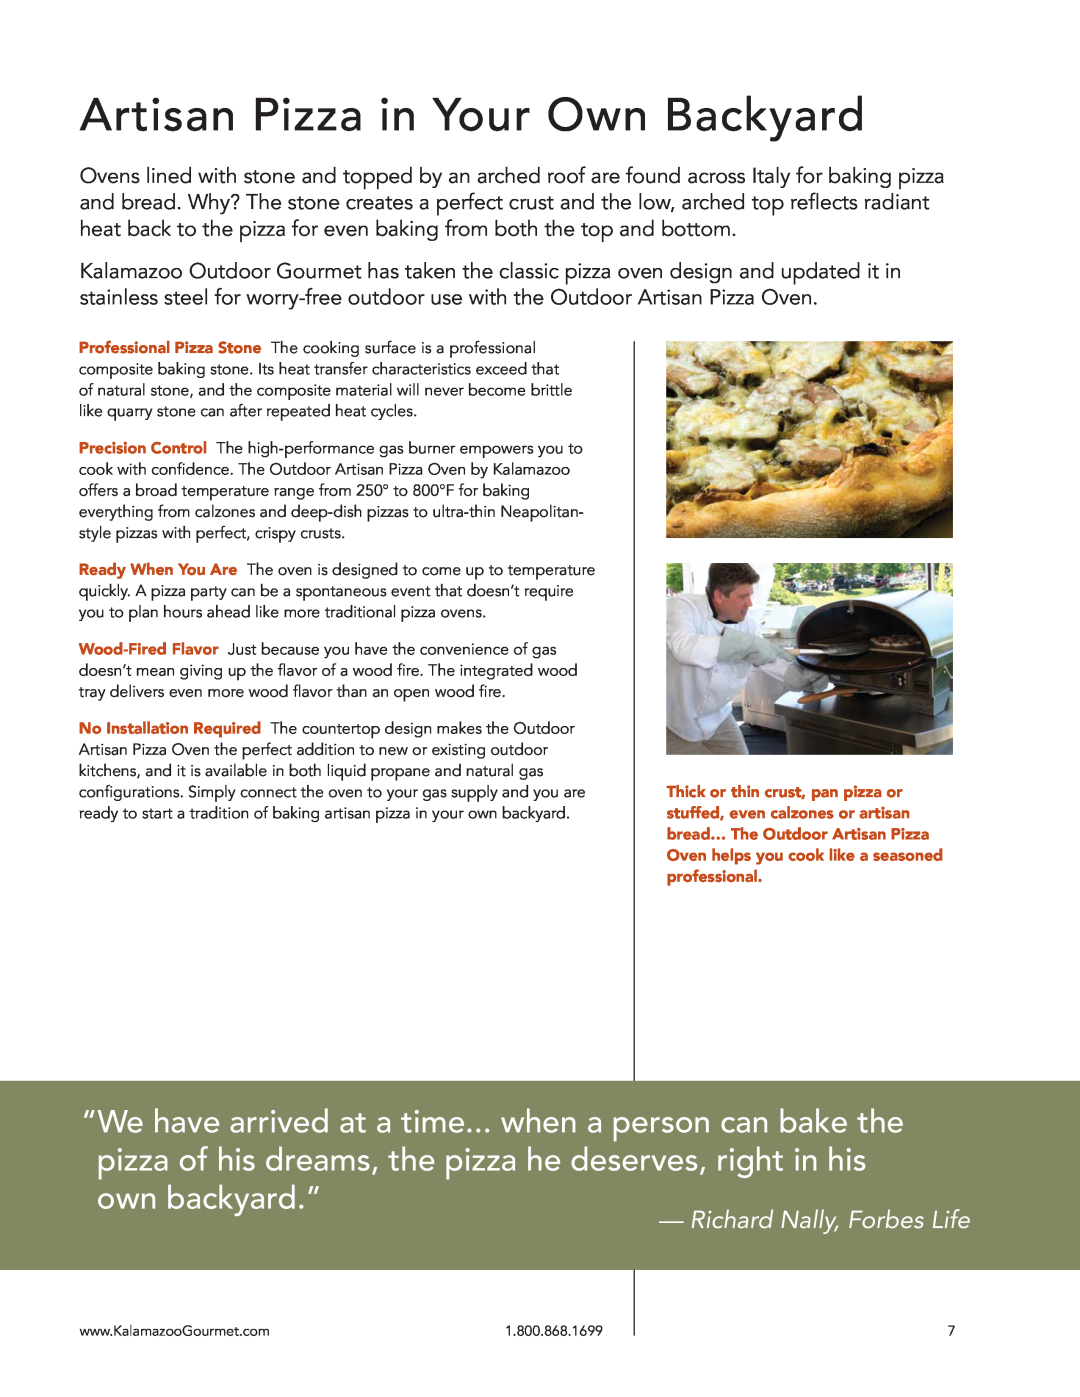 Kalamazoo Outdoor Gourmet Grill manual Richard Nally, Forbes Life, Artisan Pizza in Your Own Backyard 